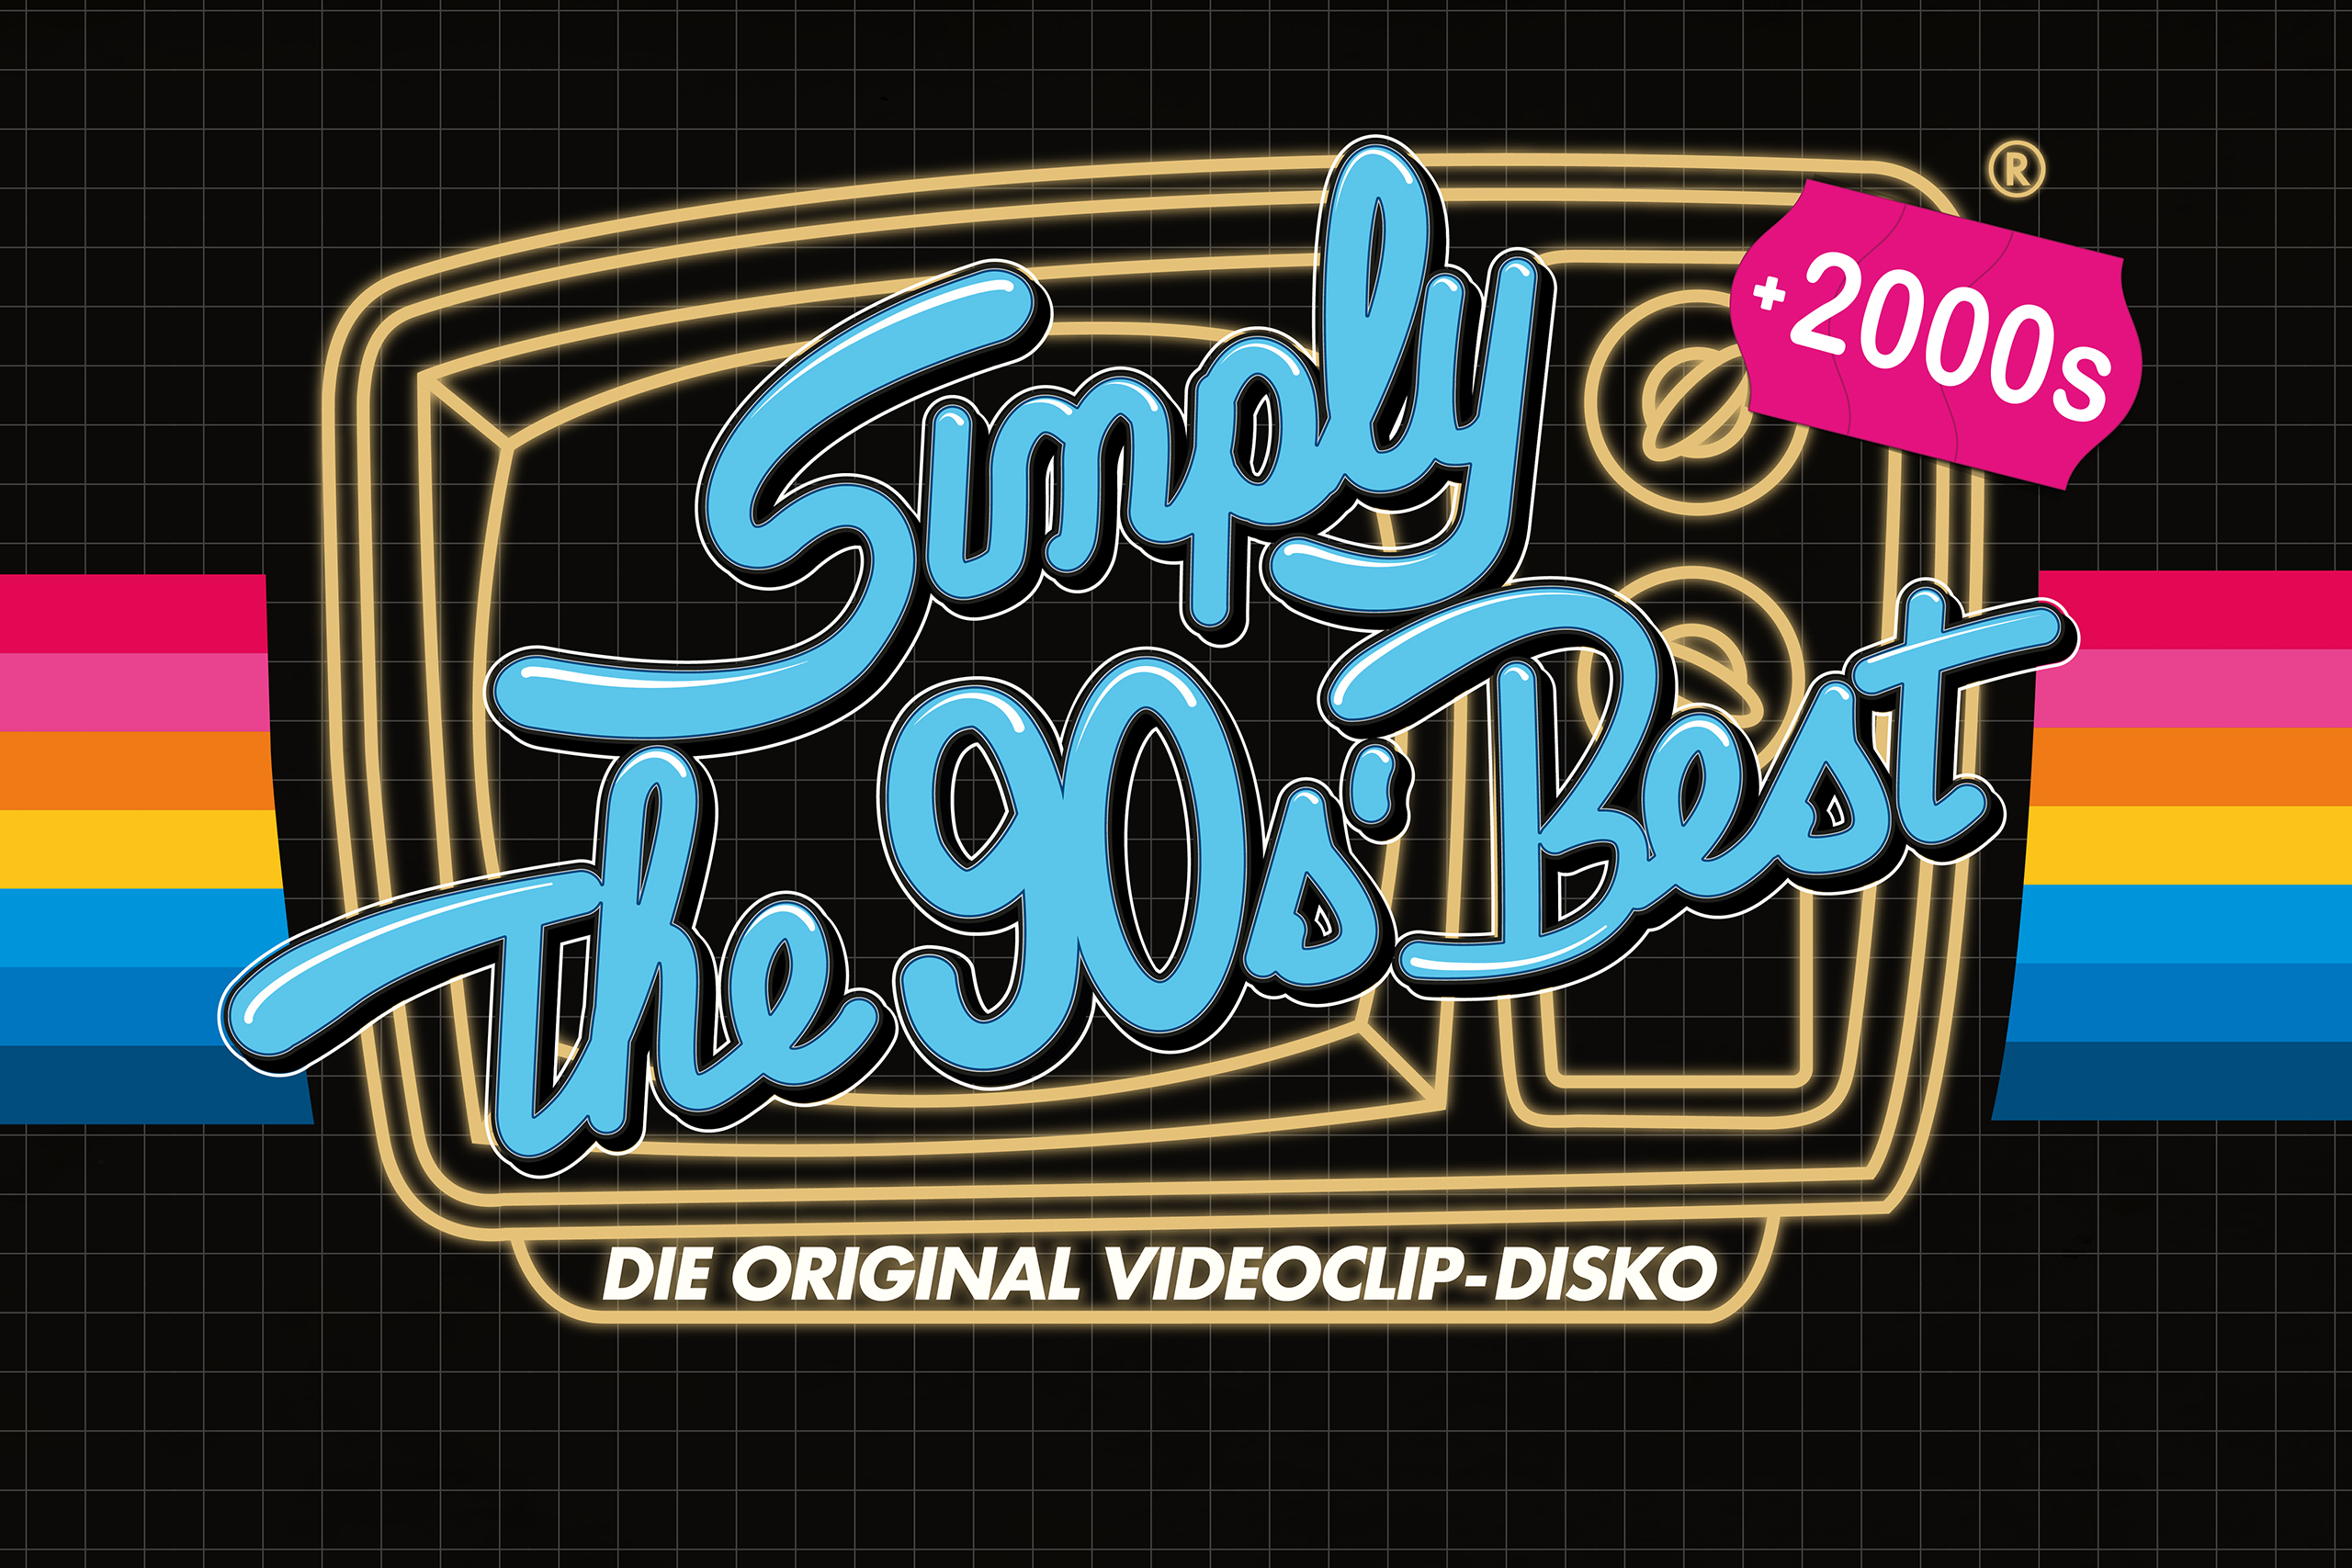 (c) Simply-the-80s-best.com